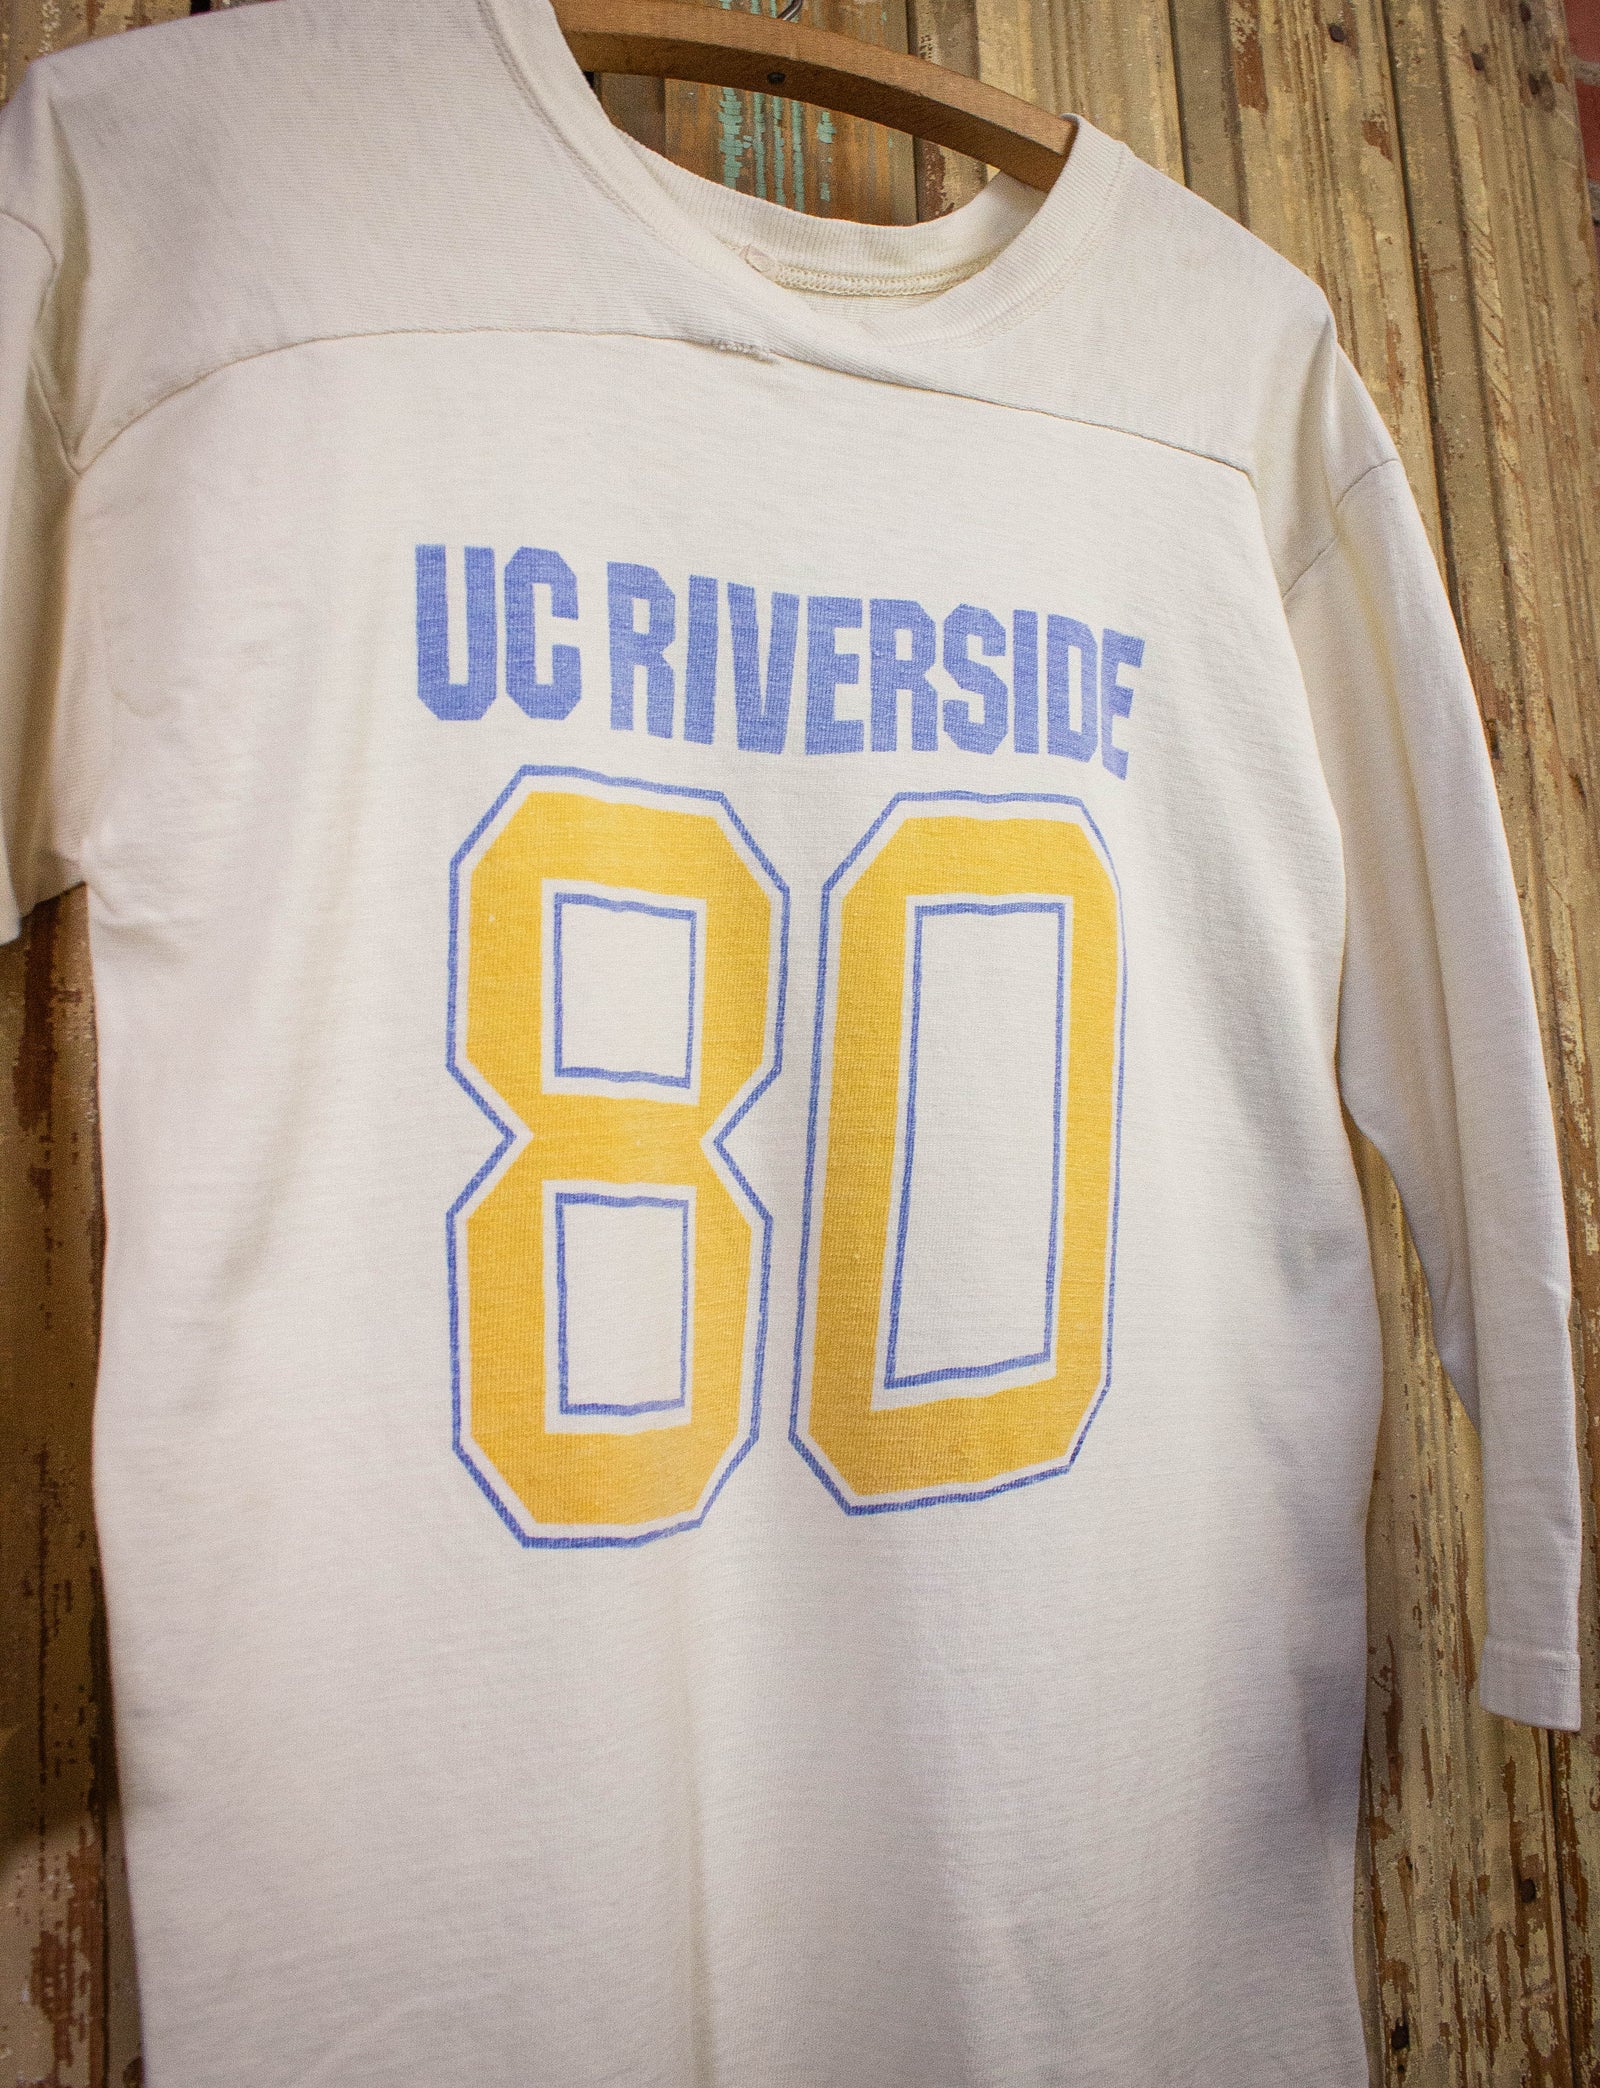 Vintage UC Riverside Long Sleeve Jersey T Shirt 1980 White Small/Medium